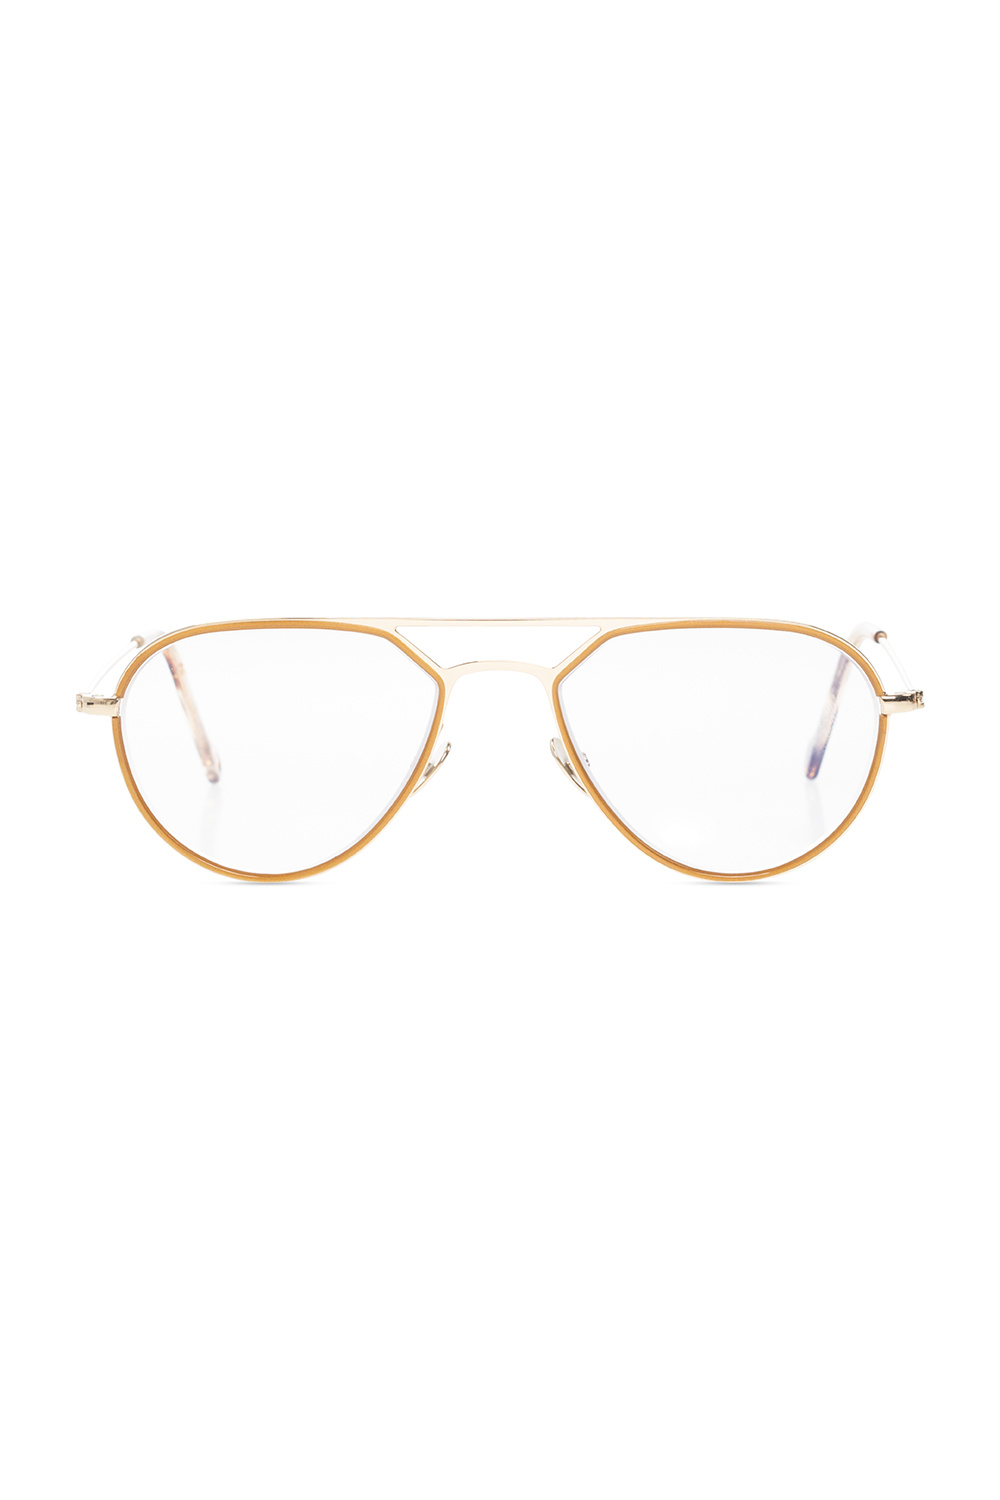 Monsieur Blanc ‘Claude’ optical glasses